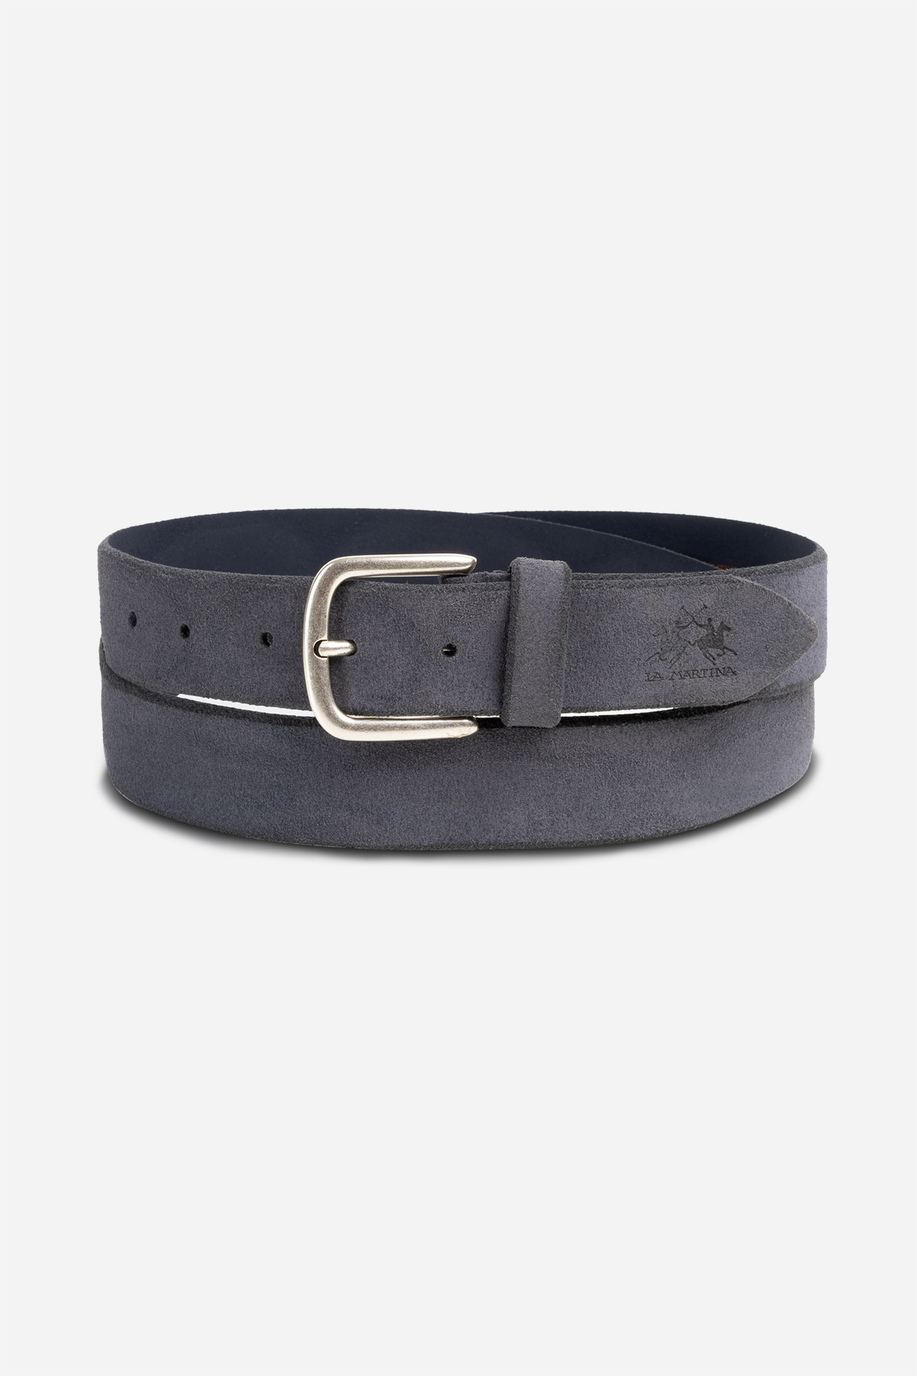 Calf leather belt - Belts | La Martina - Official Online Shop